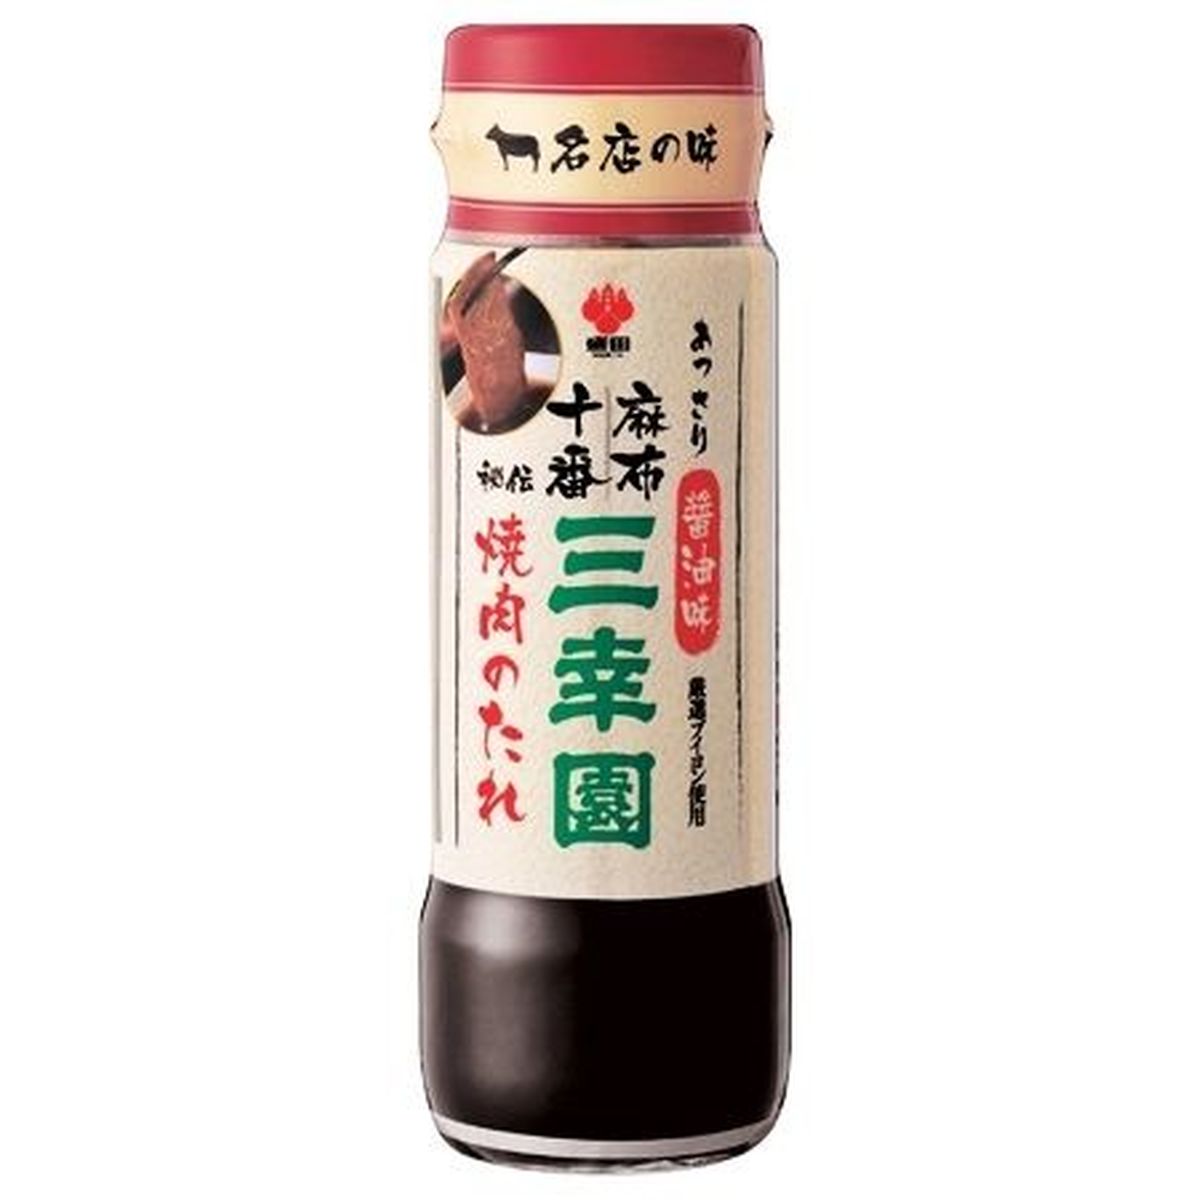 【12個入リ】盛田 麻布十番三幸園 焼肉ノタレ 醤油 245g